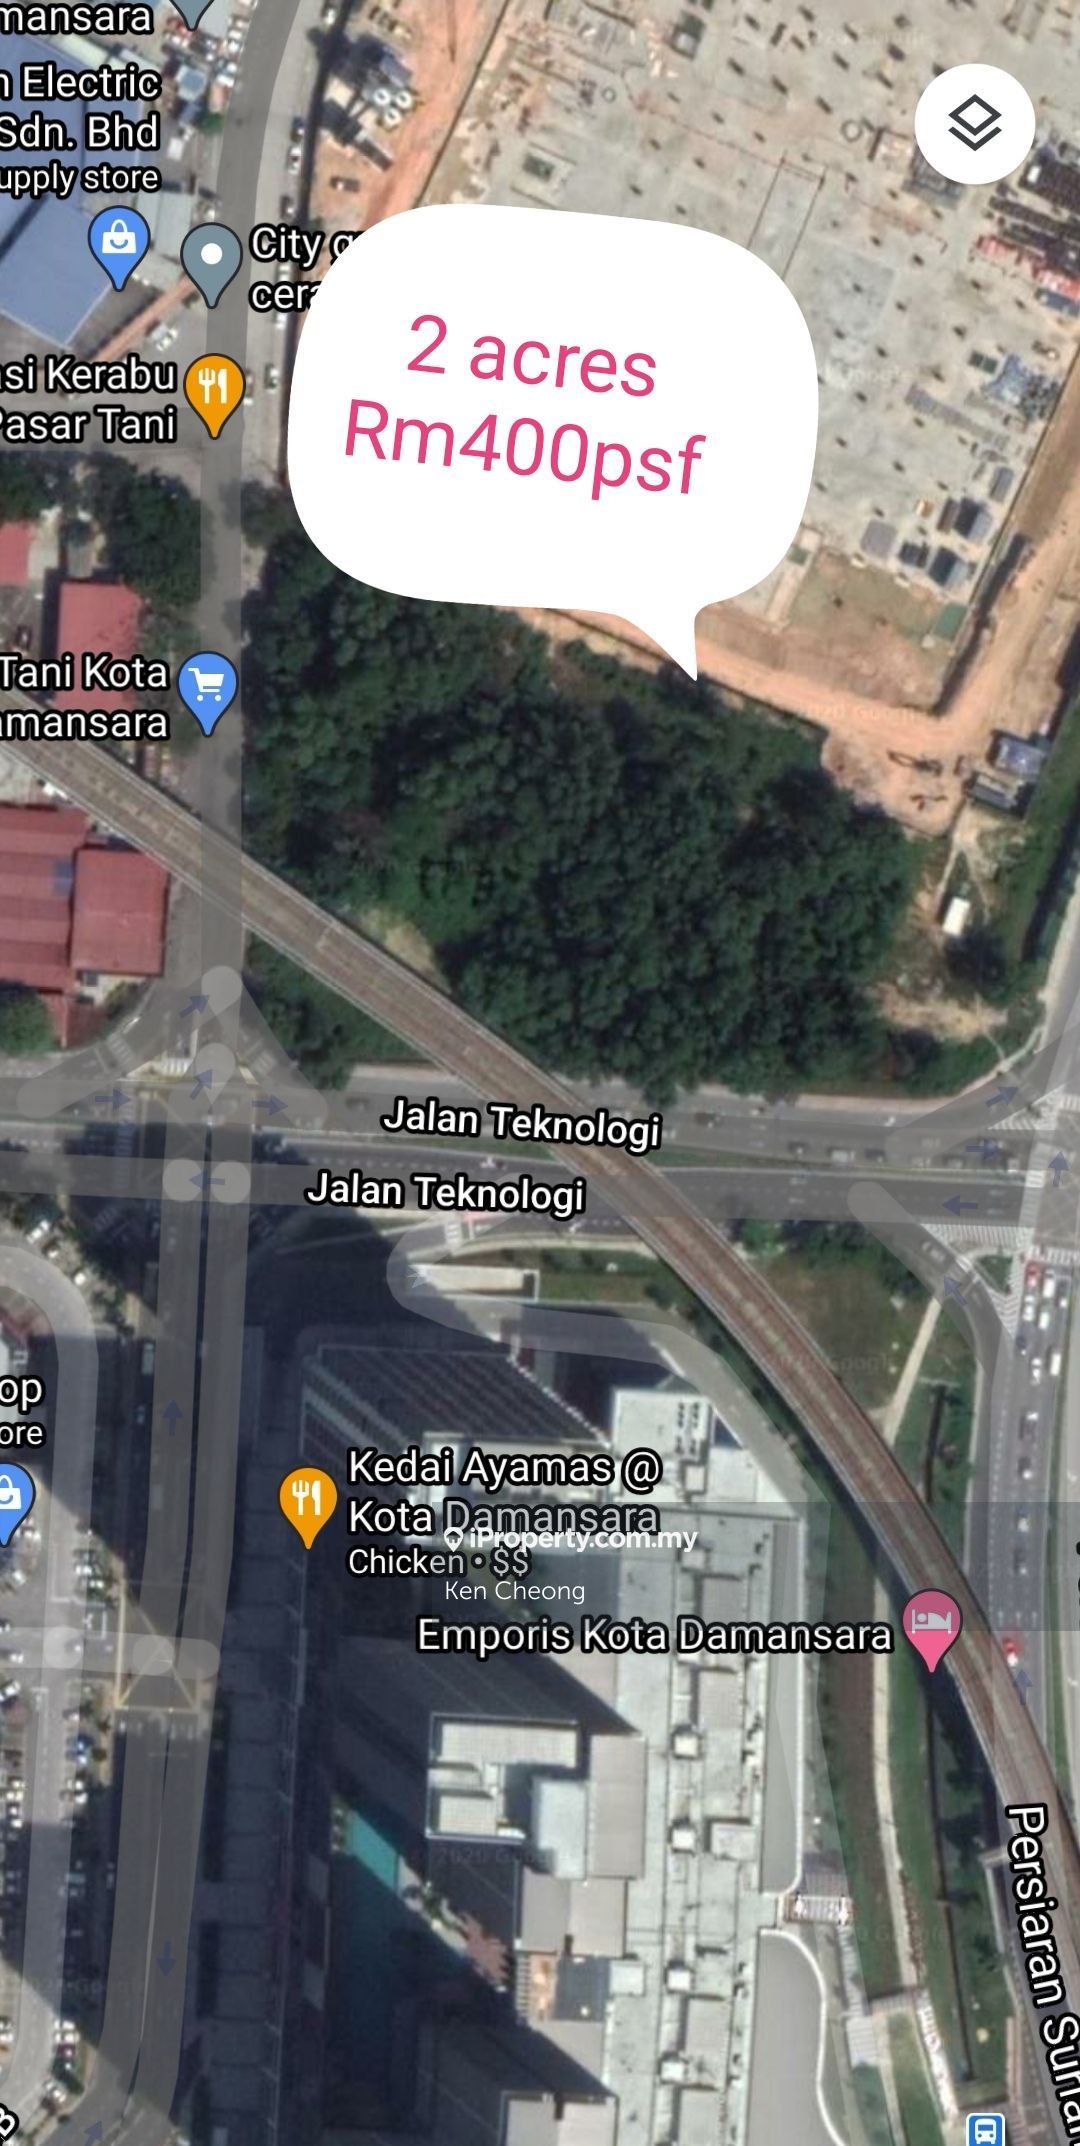 Kota Damansara , Jalan Teknologi, Petaling Jaya Industrial Land for